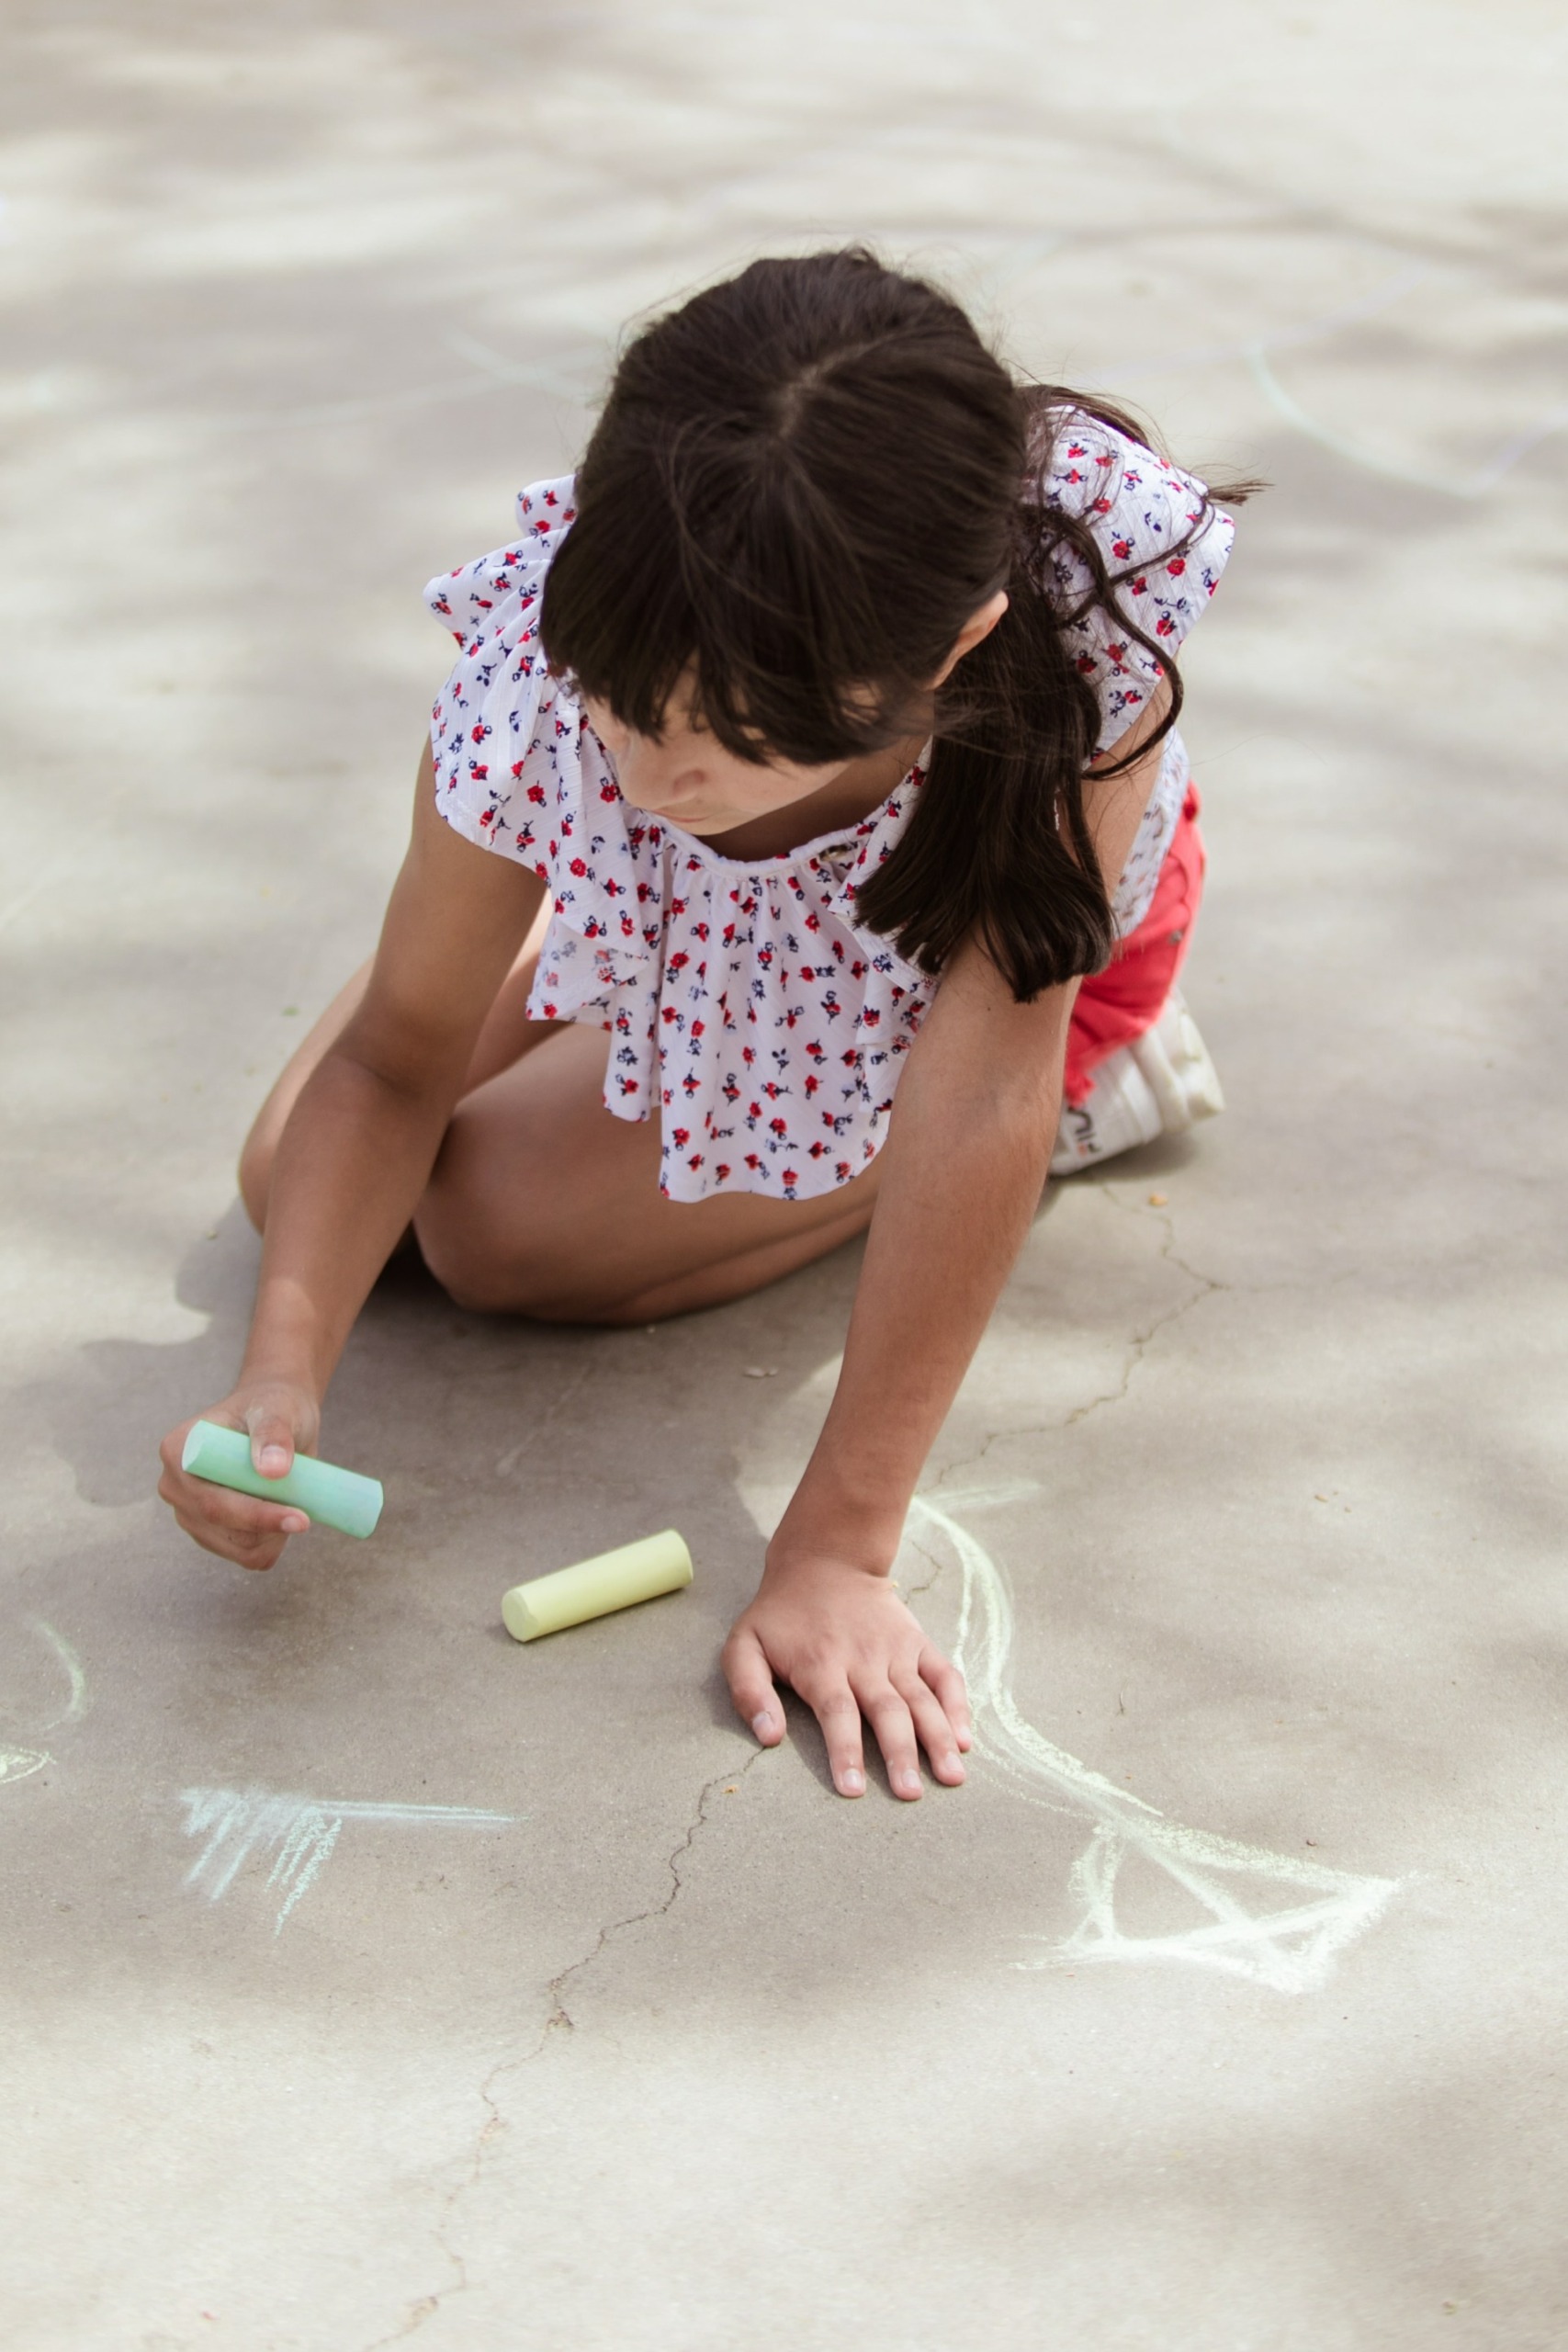 Little girl drawing with chalk on sidewalk 